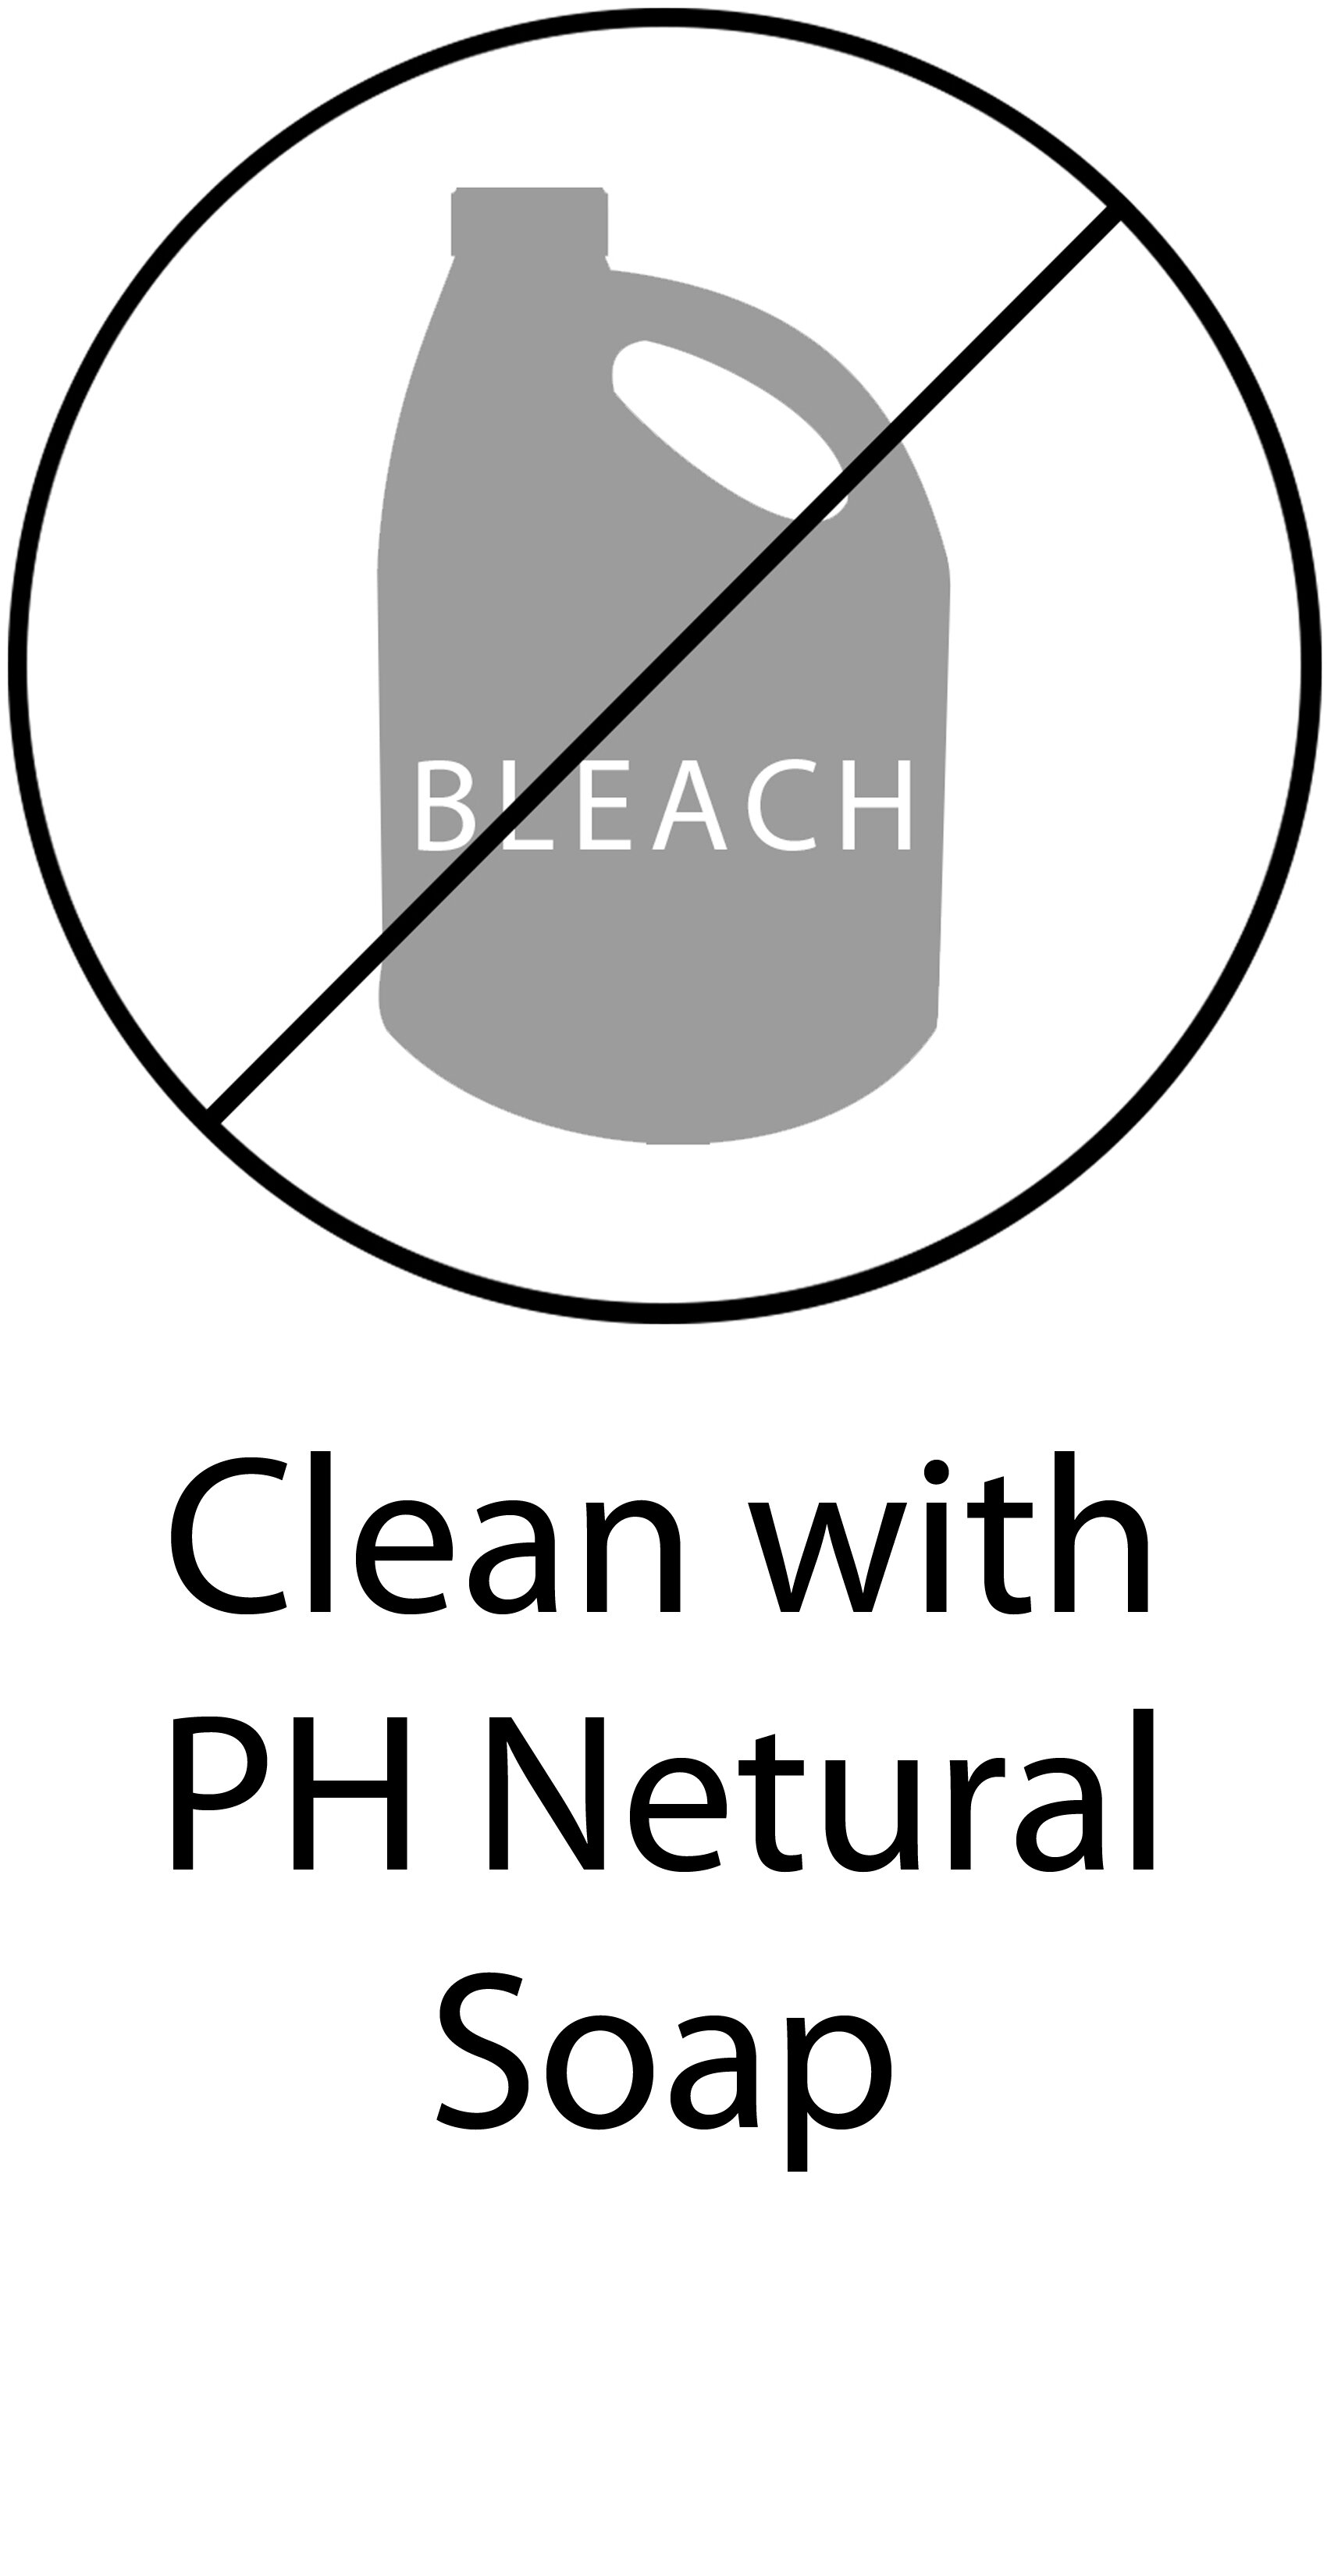 09 Clean with PH Neutral Soap.jpg